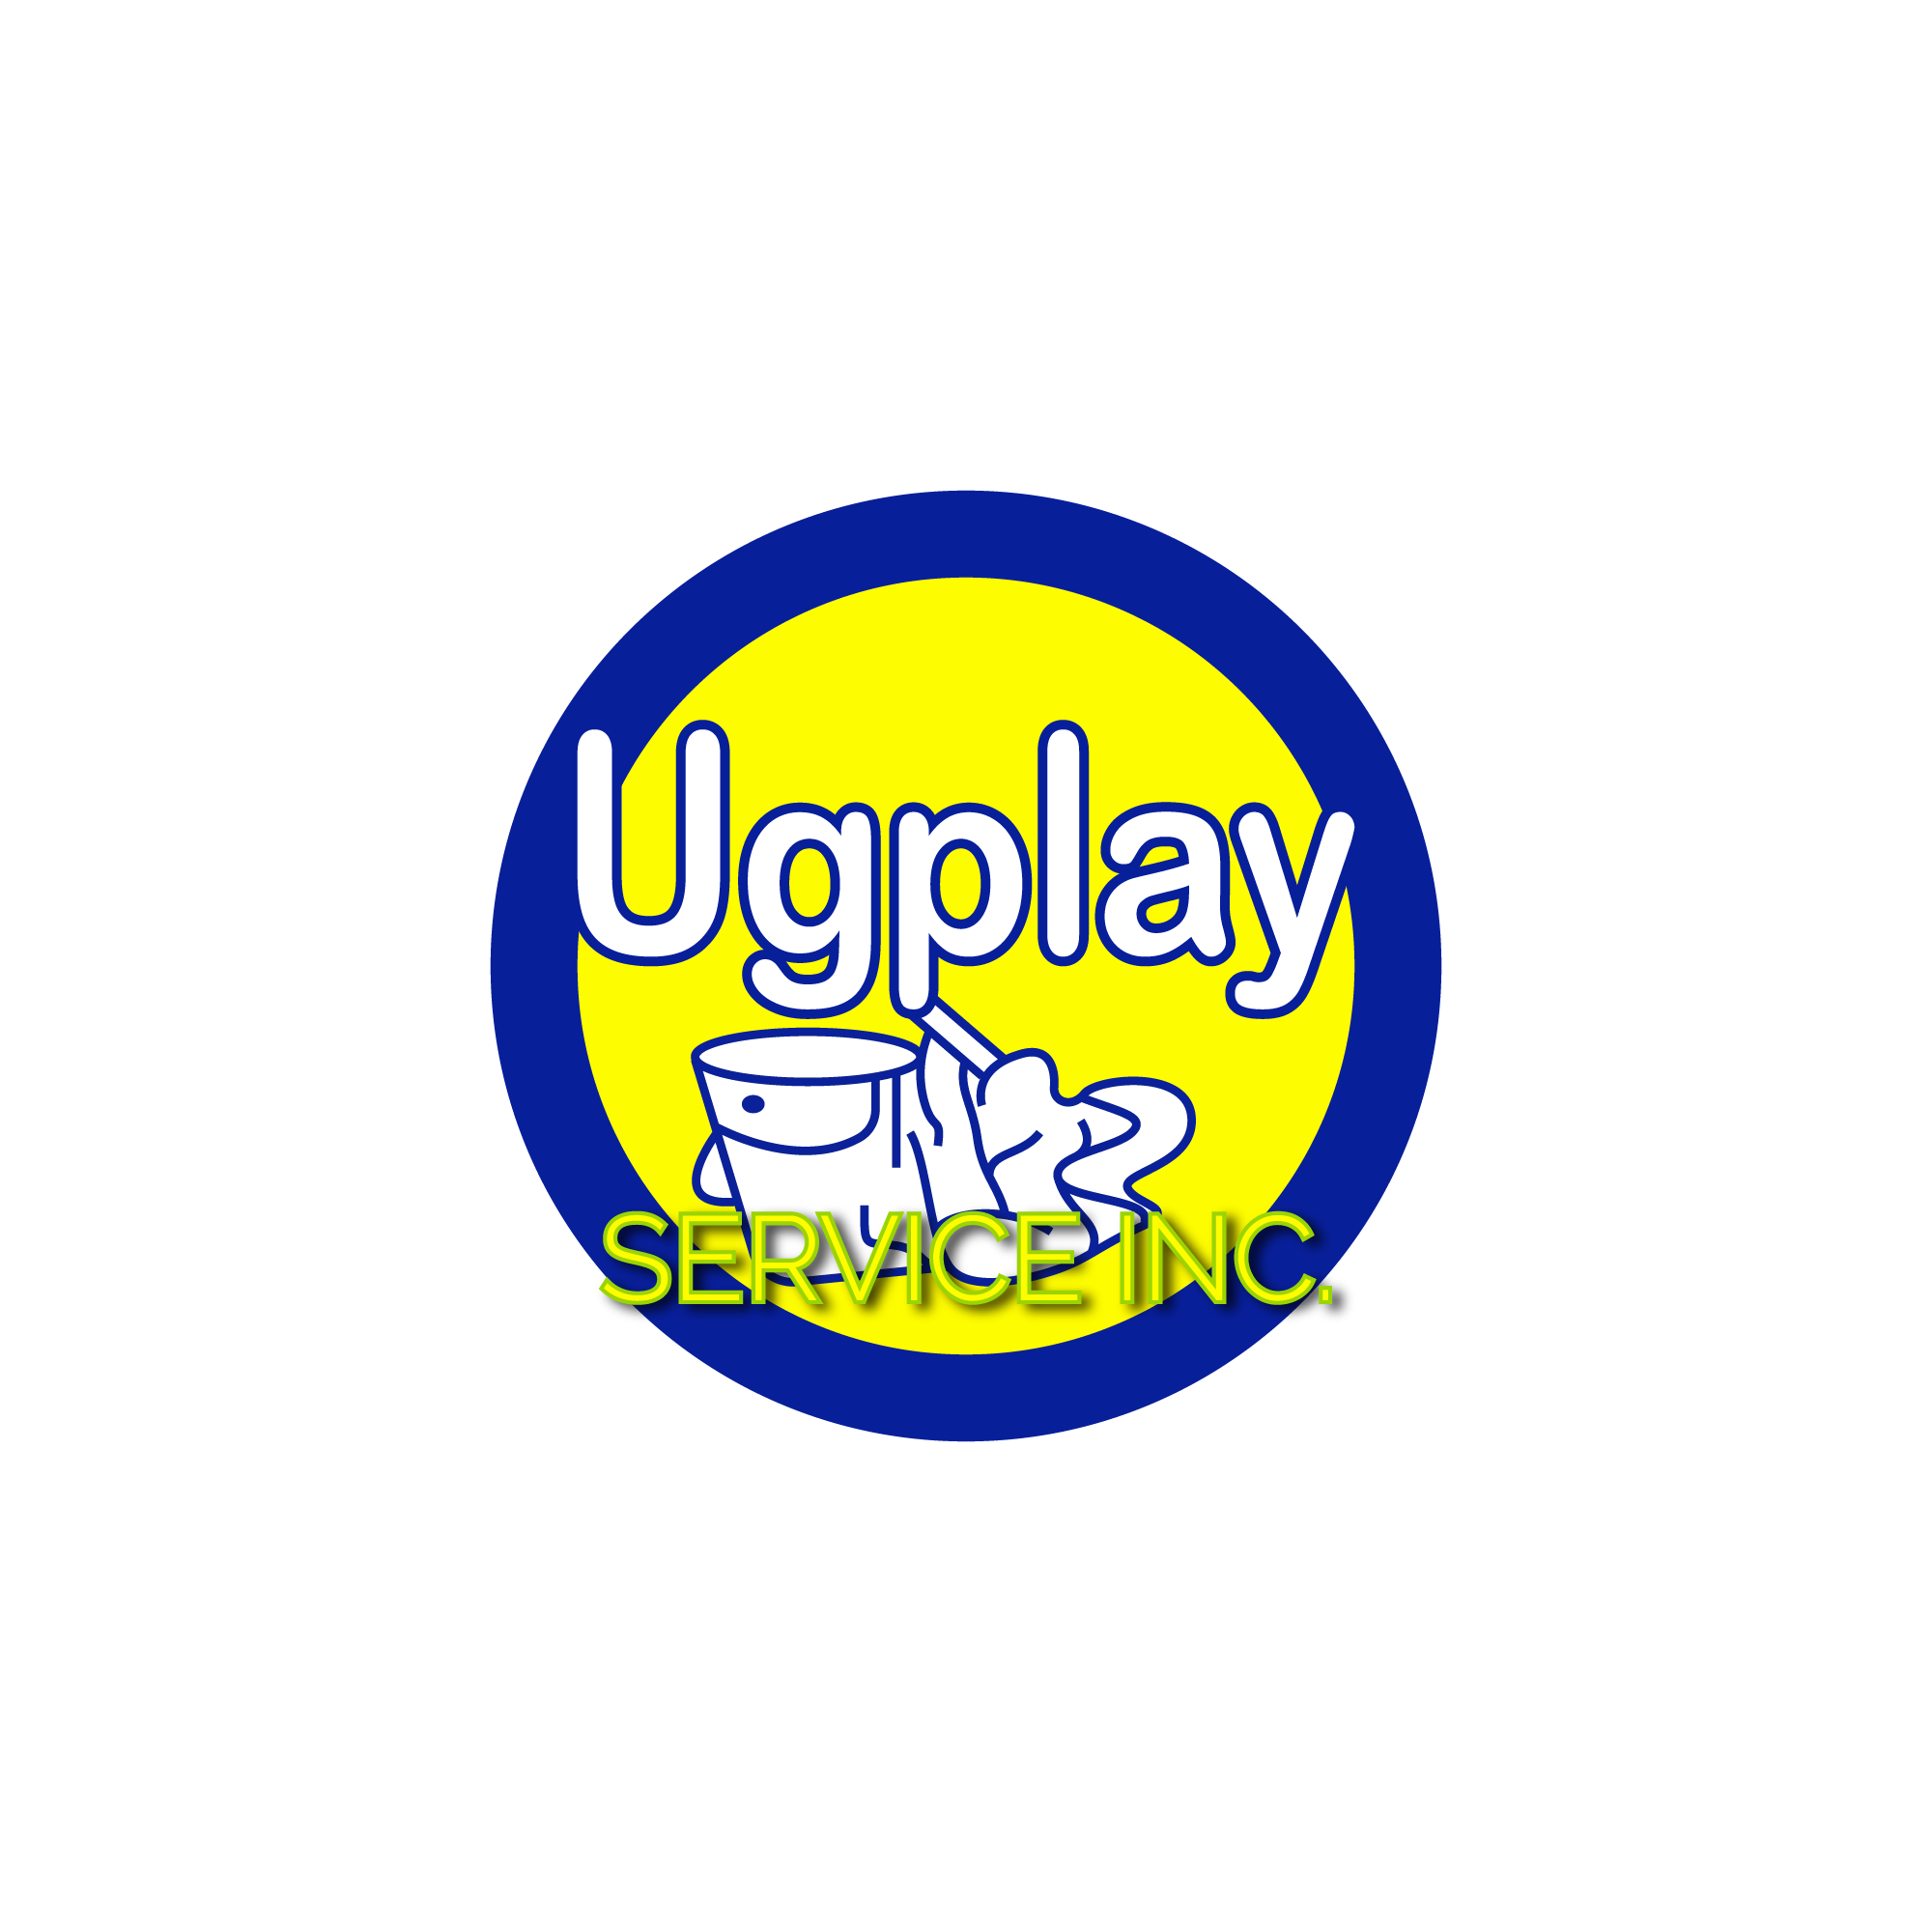 Ugplay Service INC.